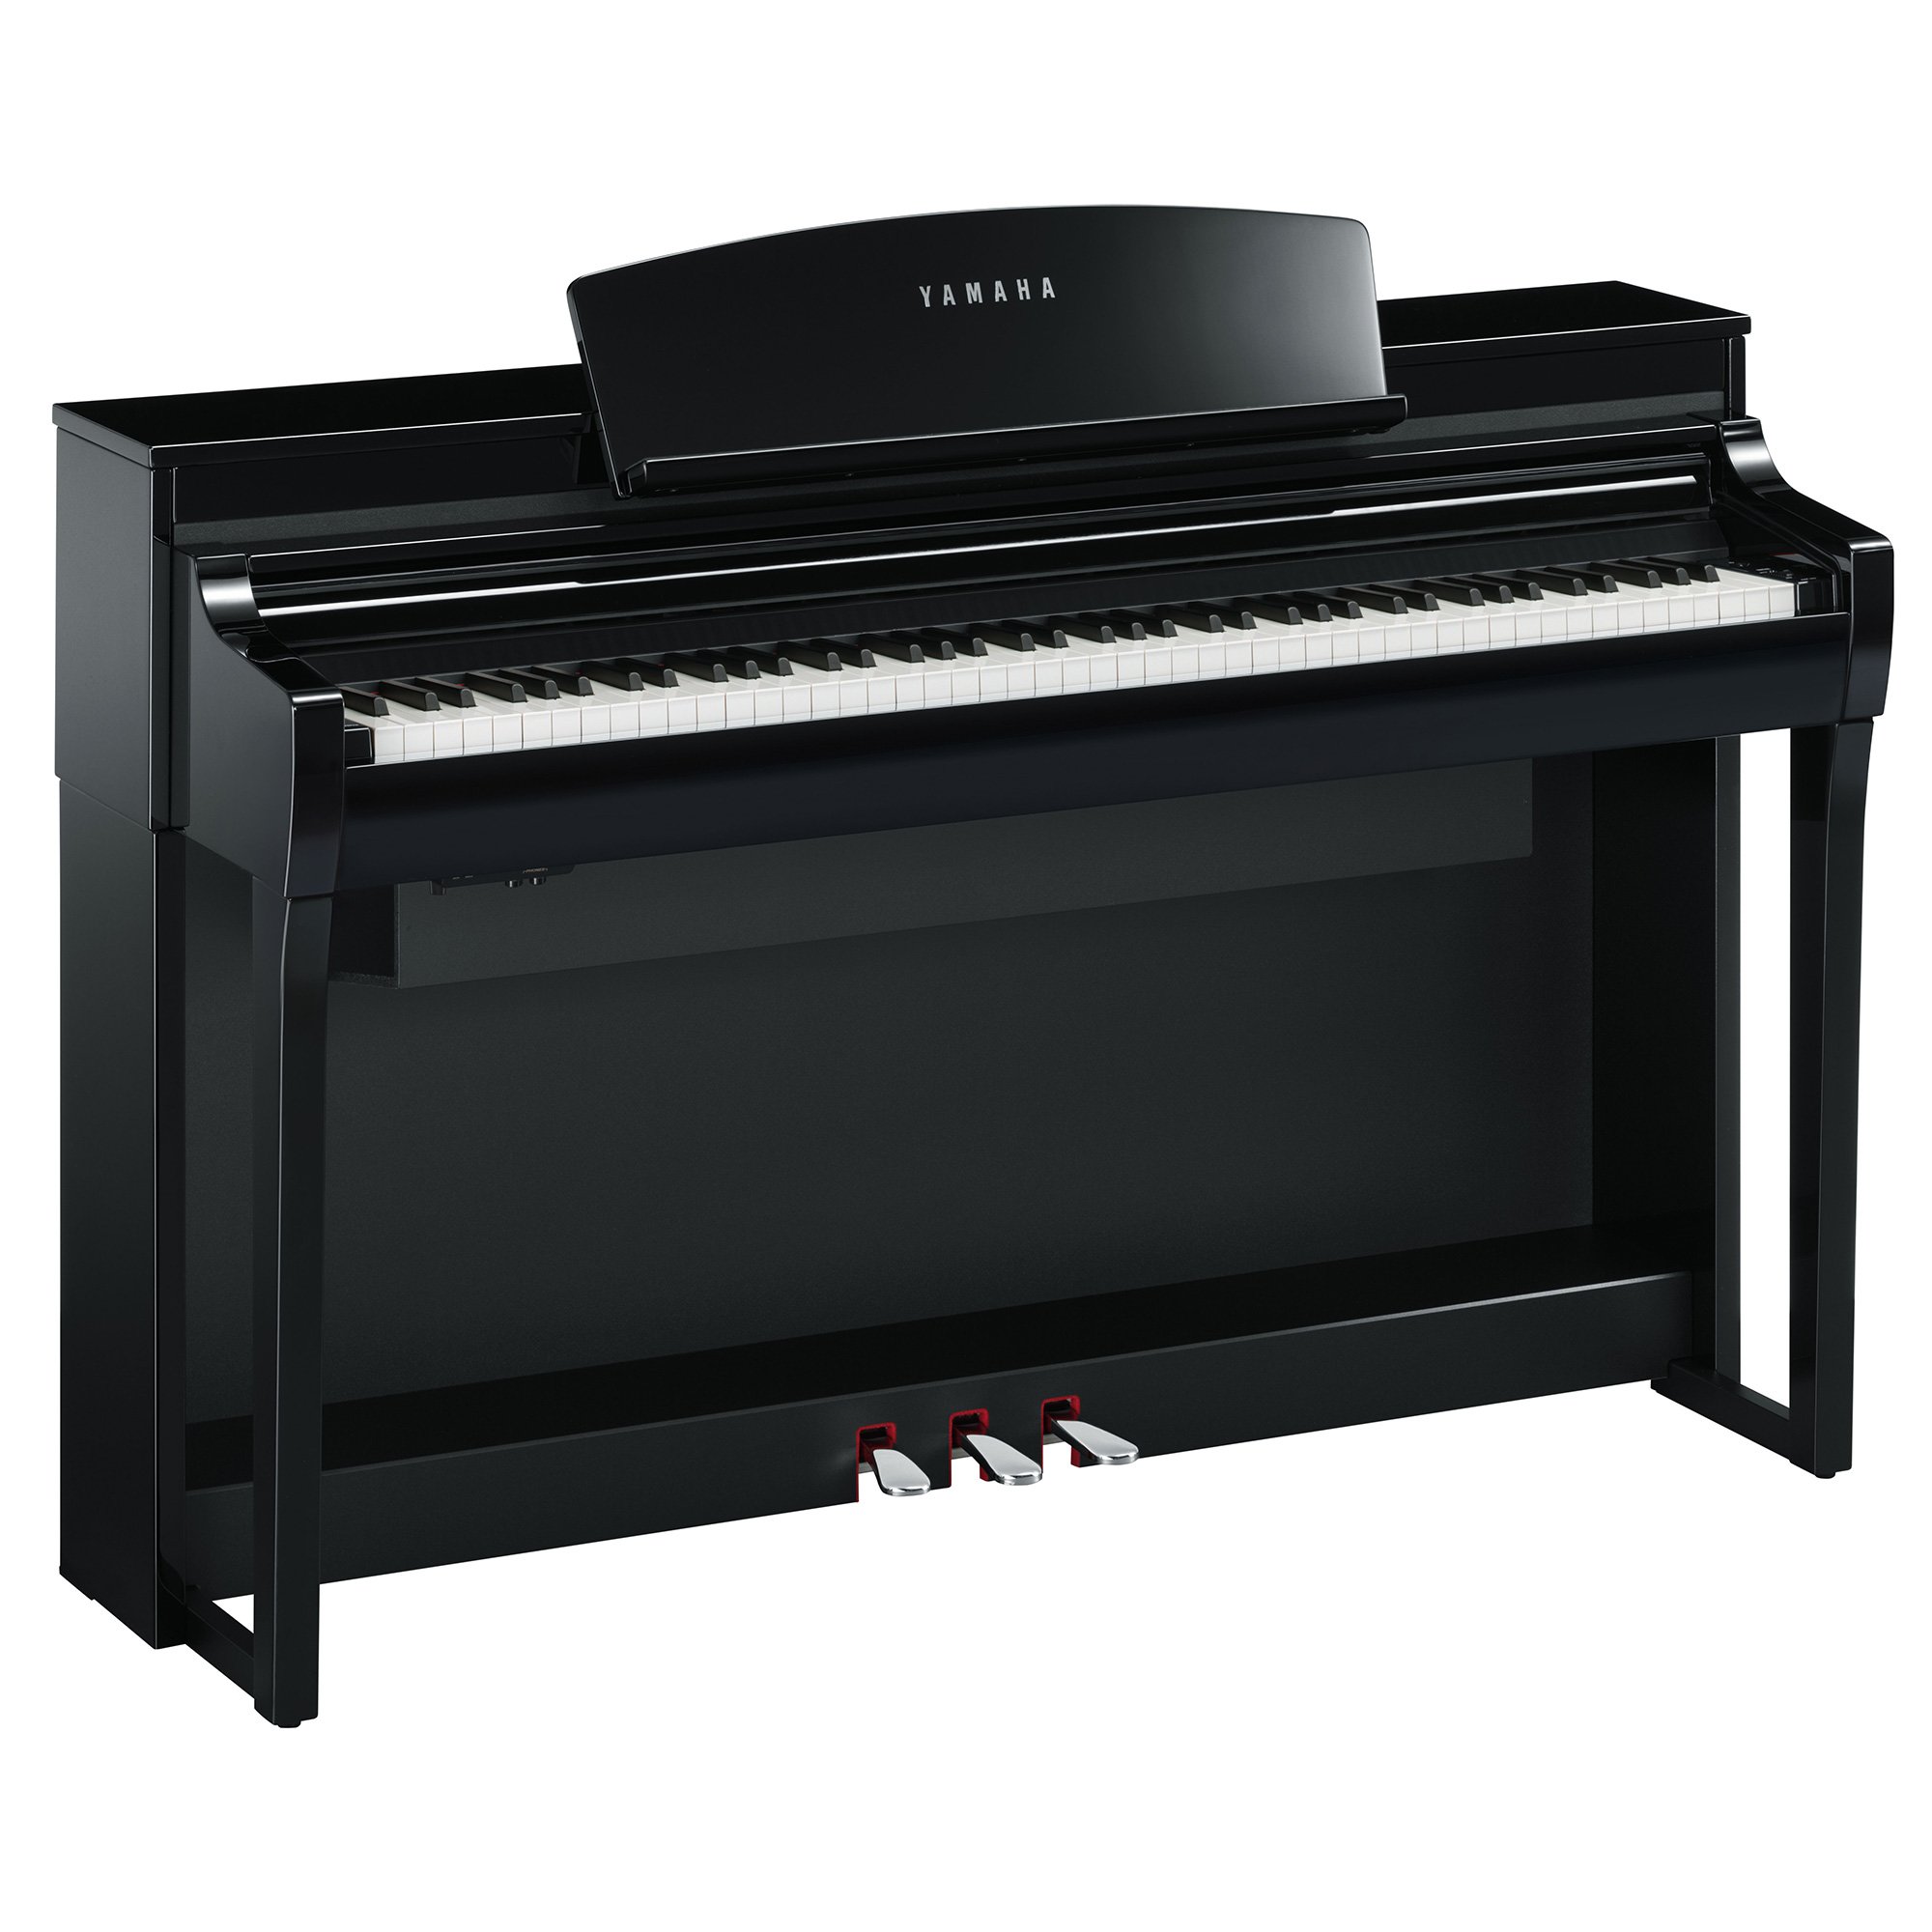 Clavinova - Pianos - Musical Instruments - Products - Yamaha 